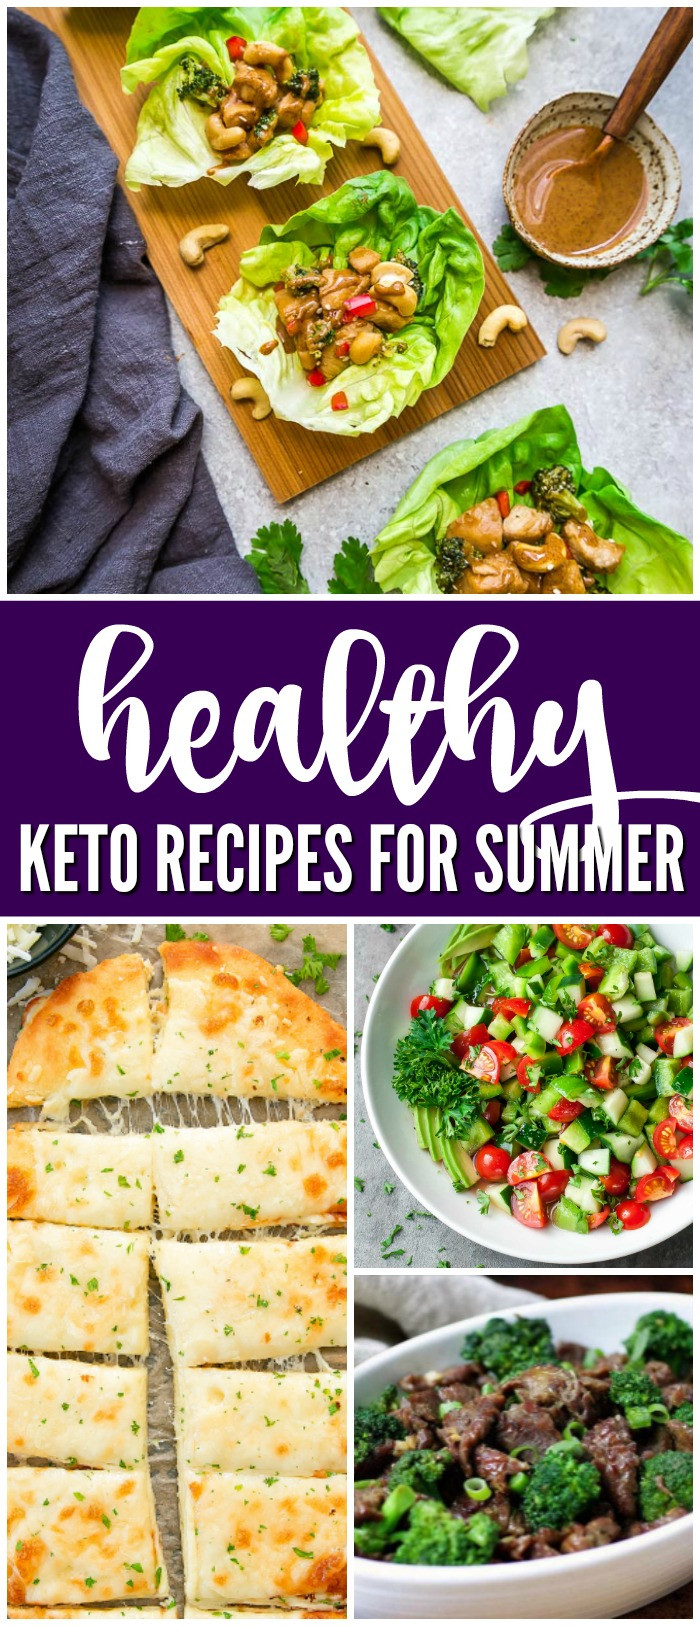 Healthy Keto Dinner Recipes Easy
 Healthy Keto Recipes for Summer